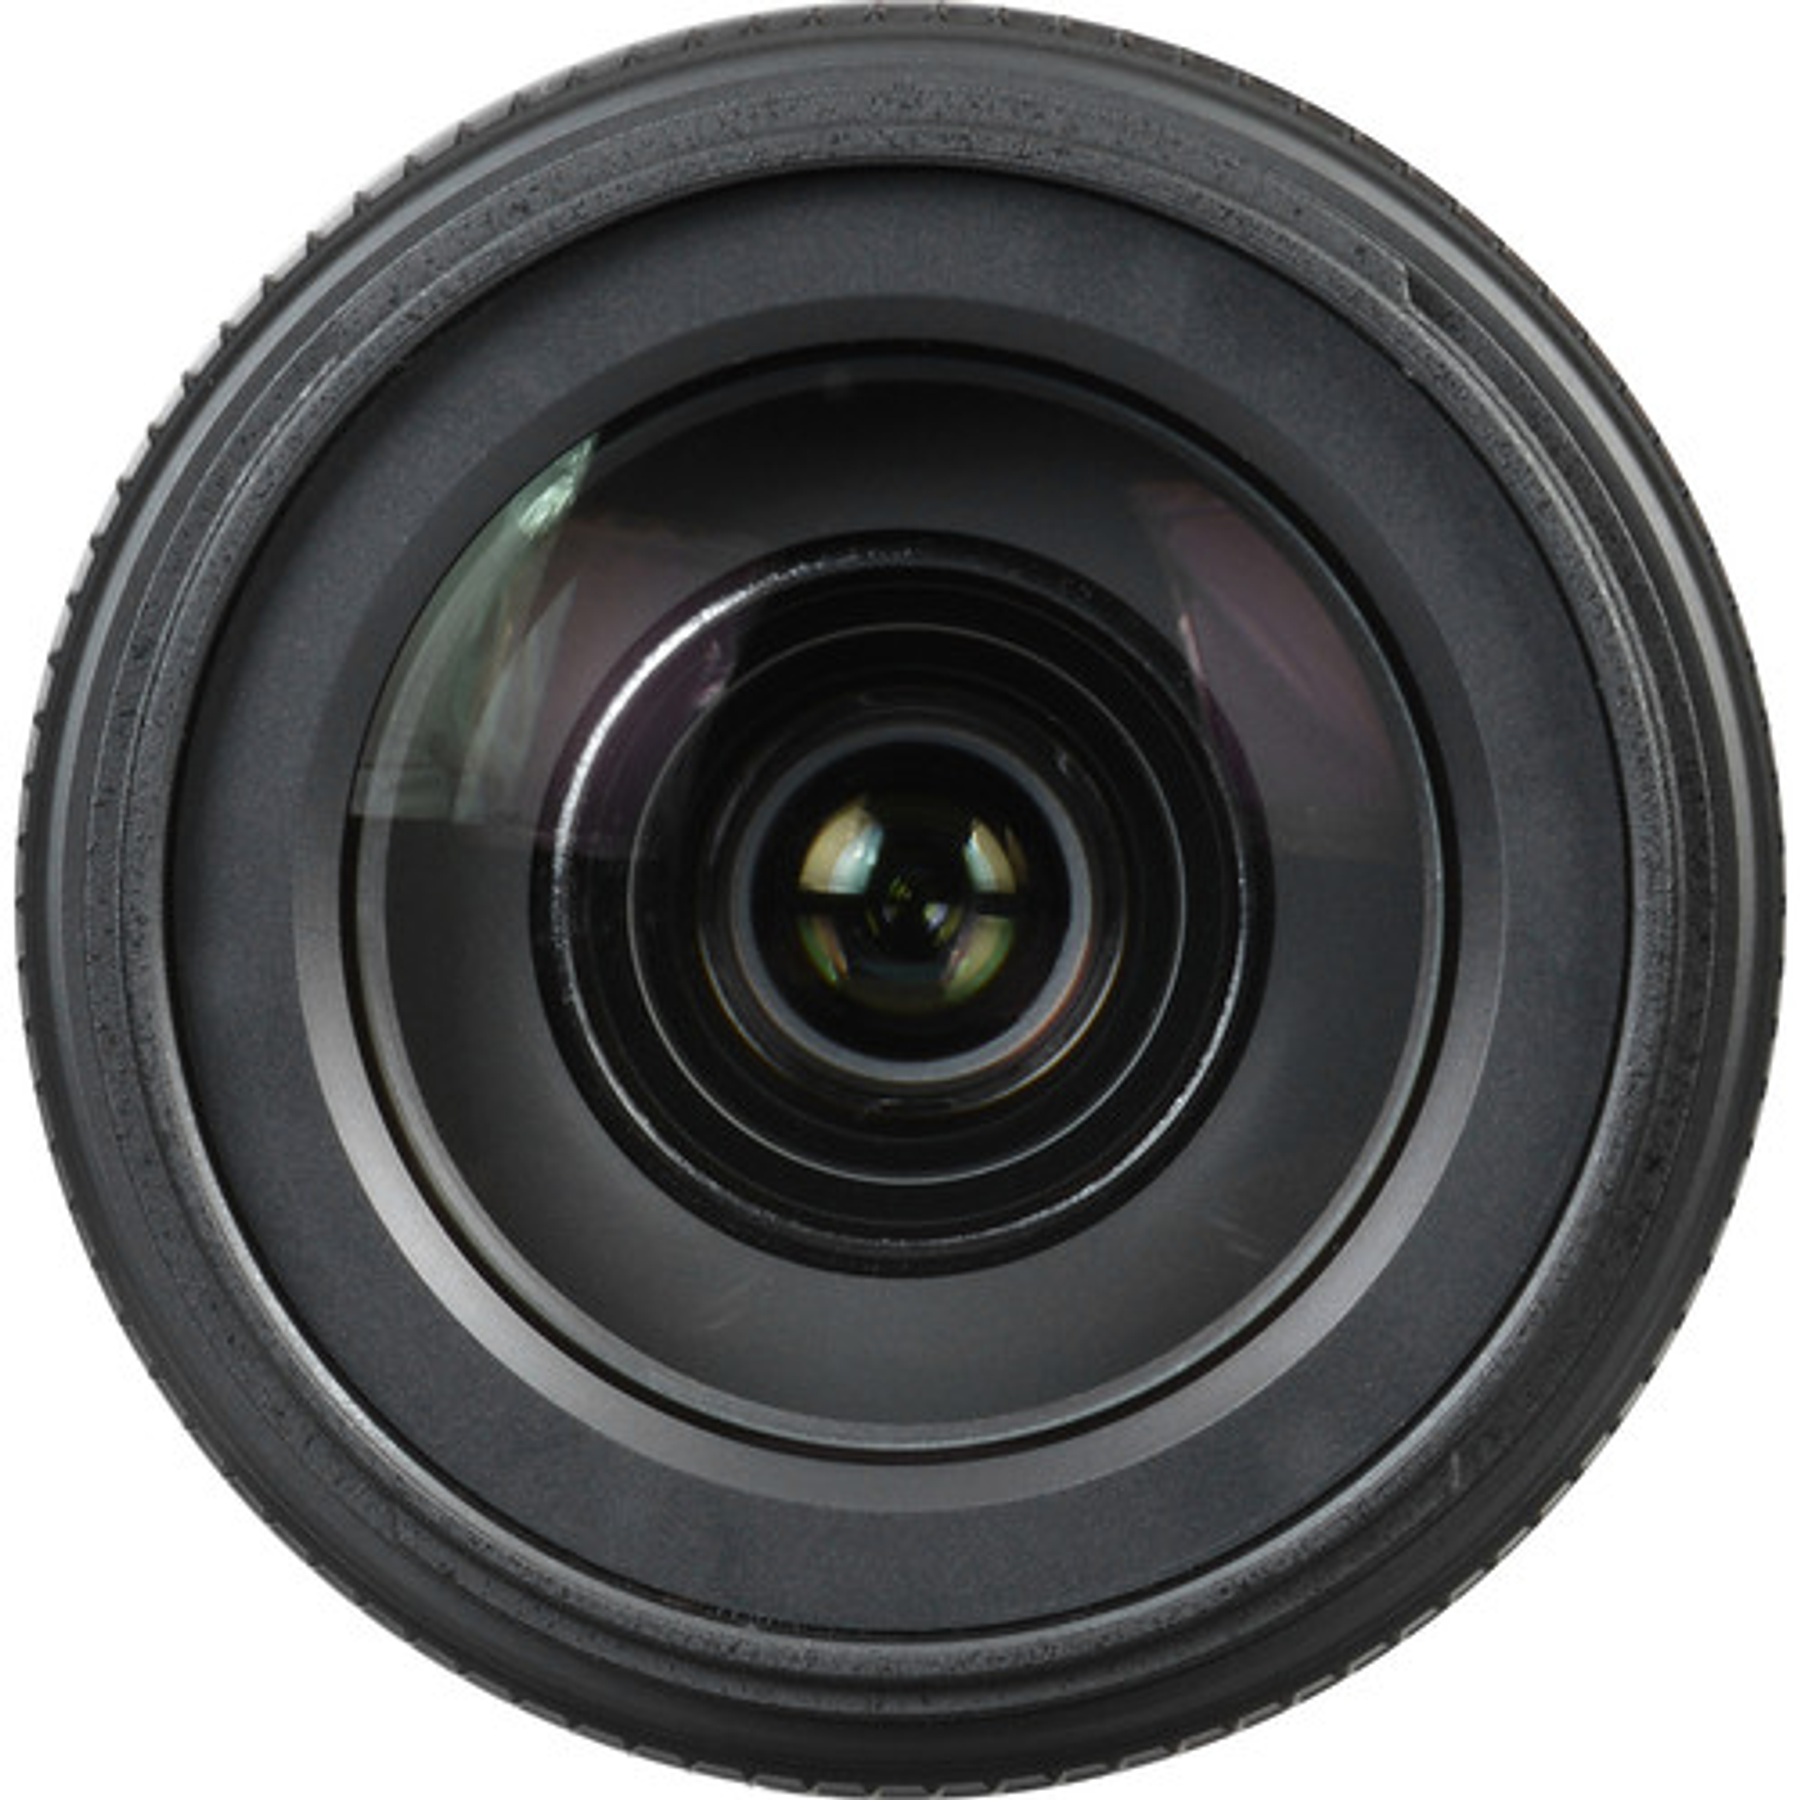 Tamron Lente 18-200mm F/3.5-6.3 Di II VC para Canon/Nikon